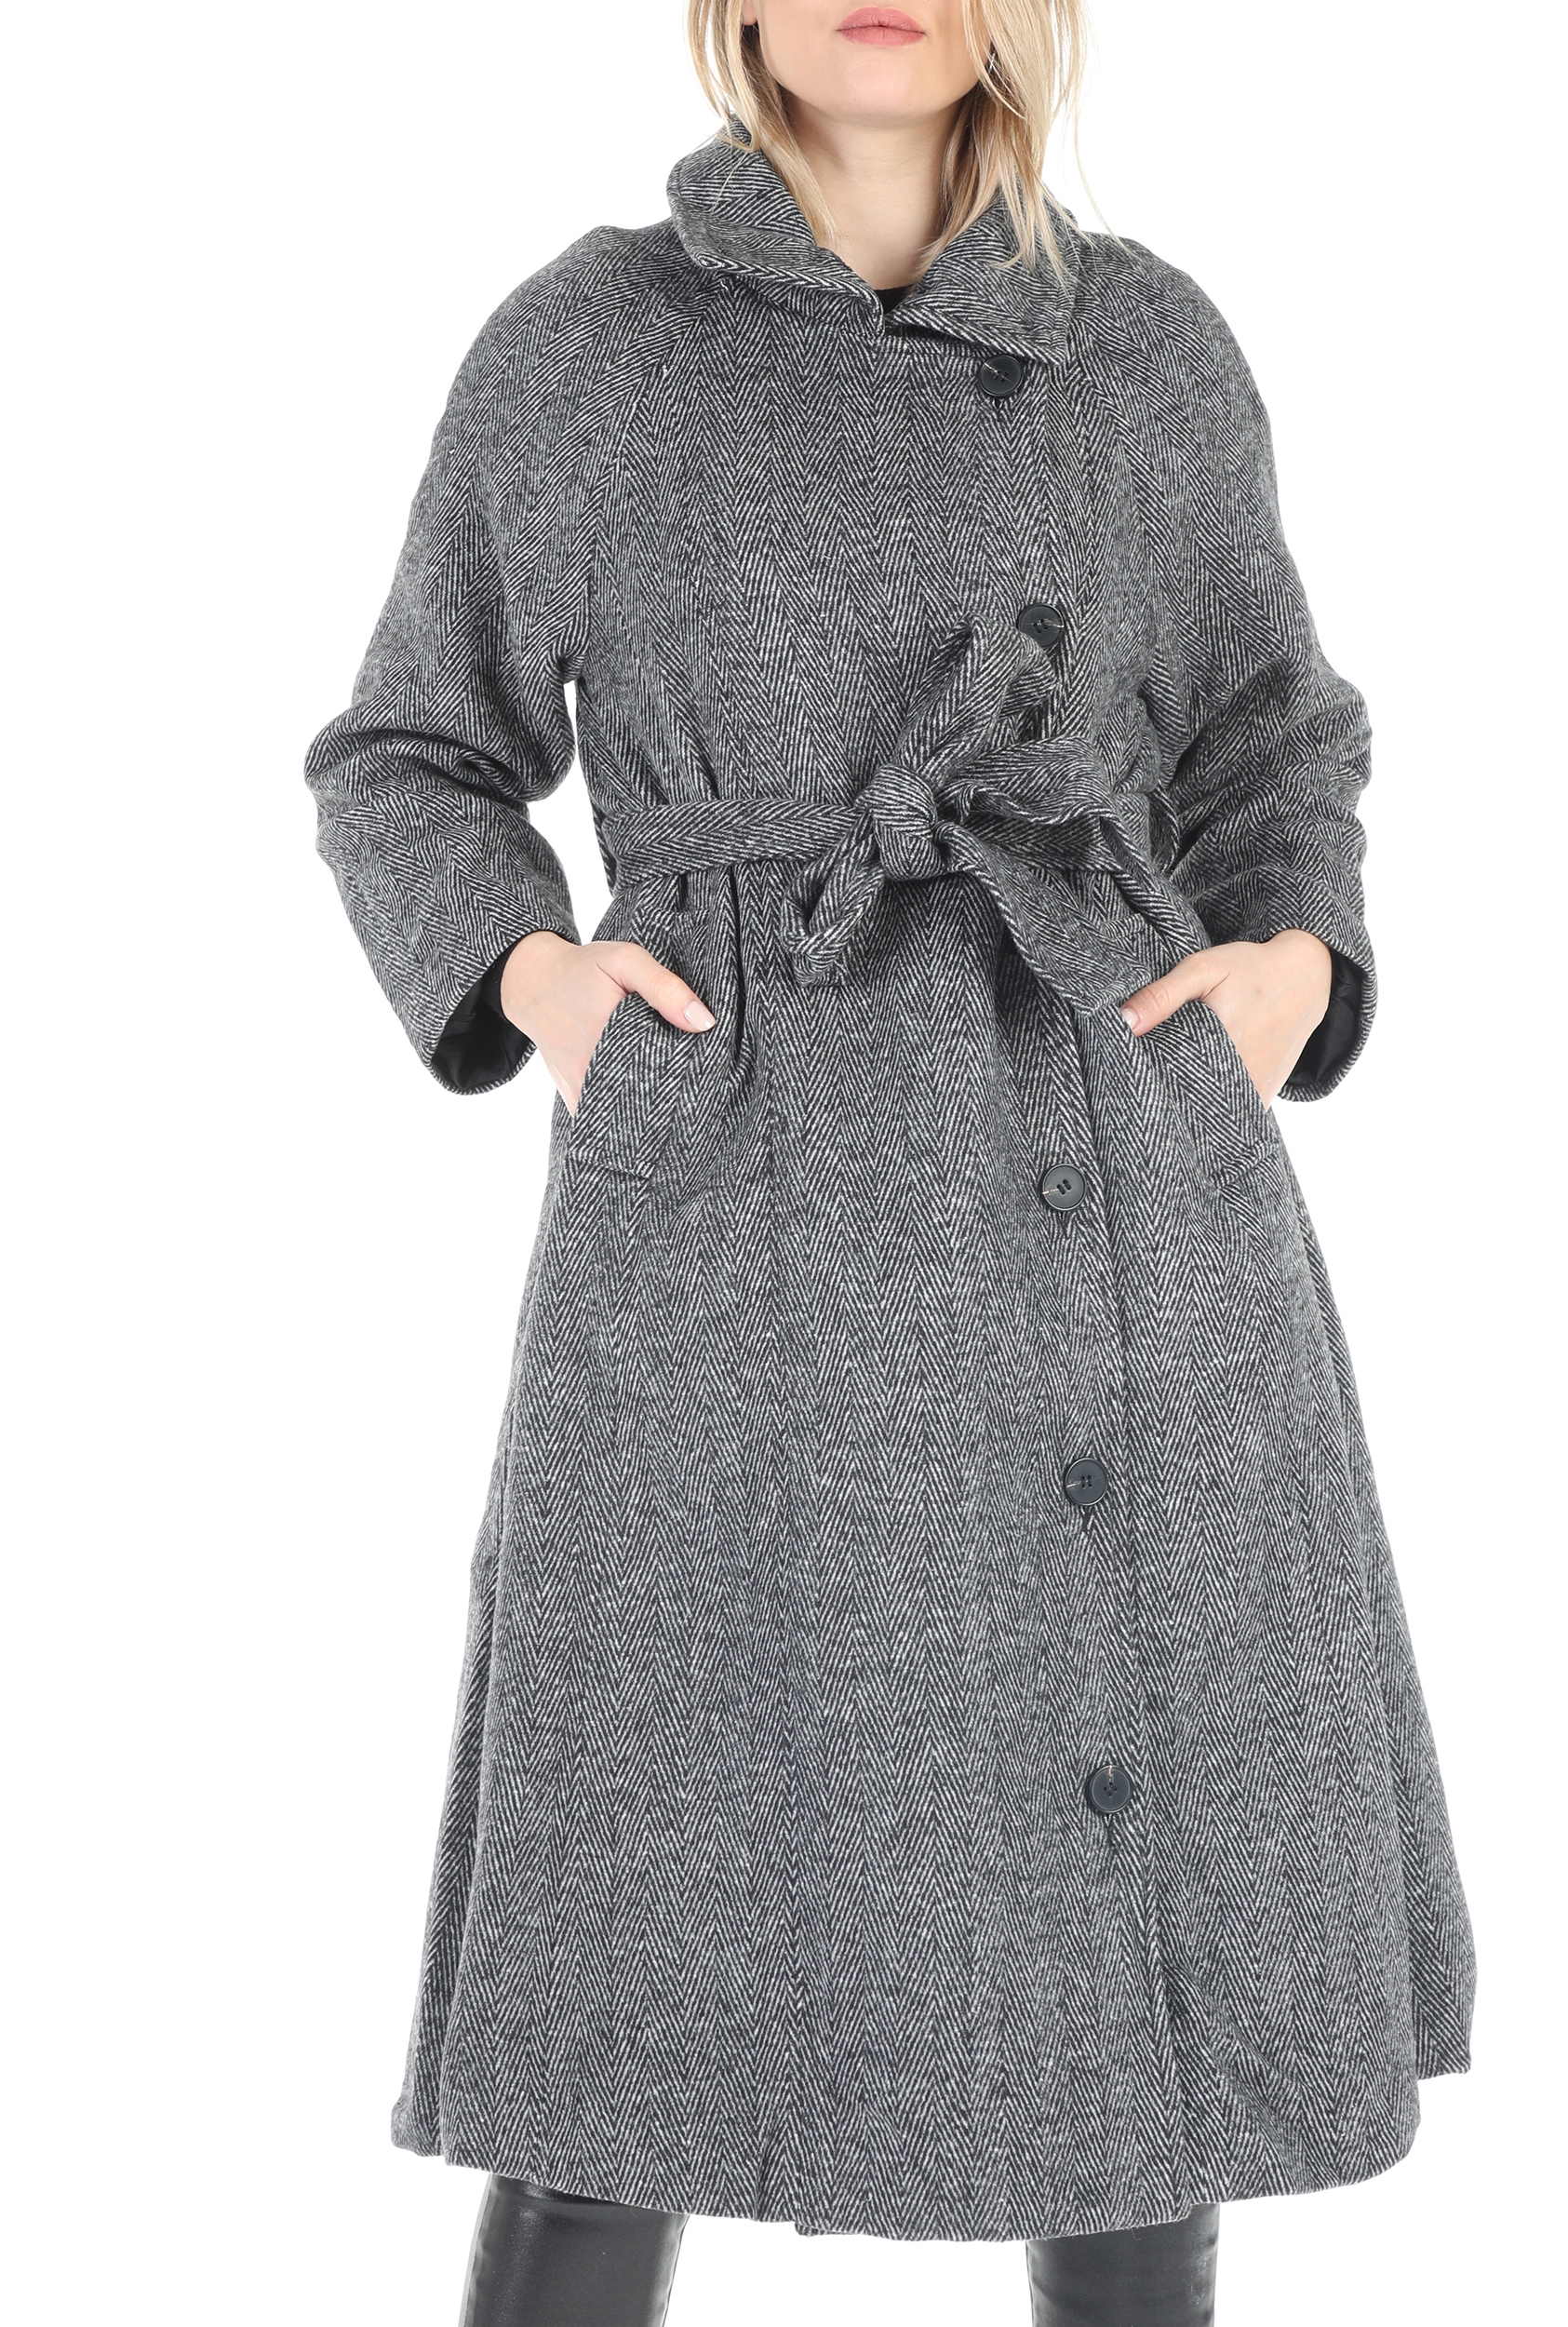 MOLLY BRACKEN – Γυναικείο παλτό MOLLY BRACKEN γκρι 1795778.0-00G6